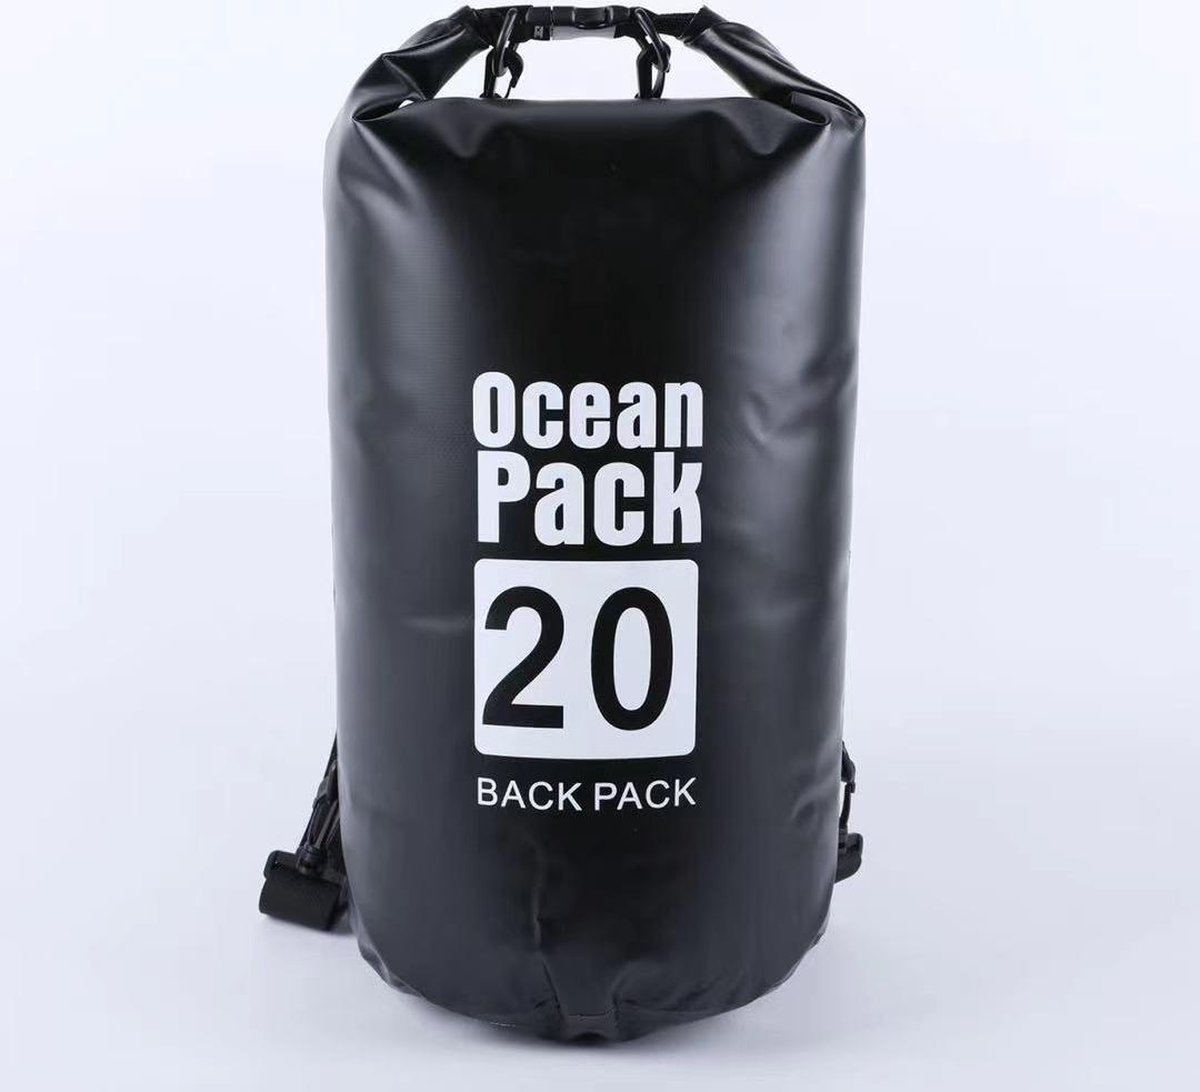 Waterdichte Tas - Dry bag - 20L - Zwart - Ocean Pack - Dry Sack - Survival Outdoor Rugzak - Drybags - Boottas - Zeiltas